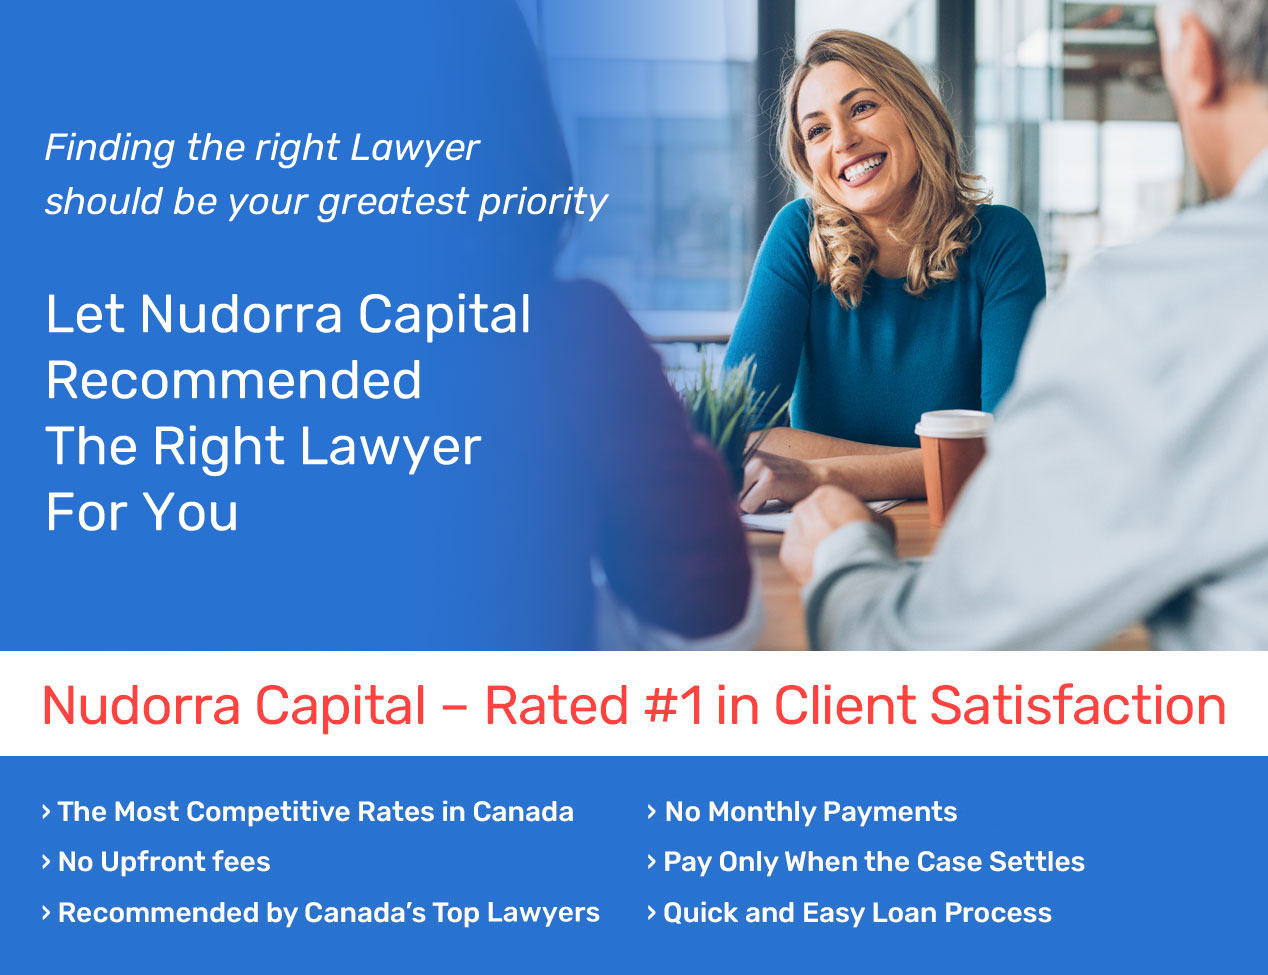 Nudorra Capital Litigation Loans